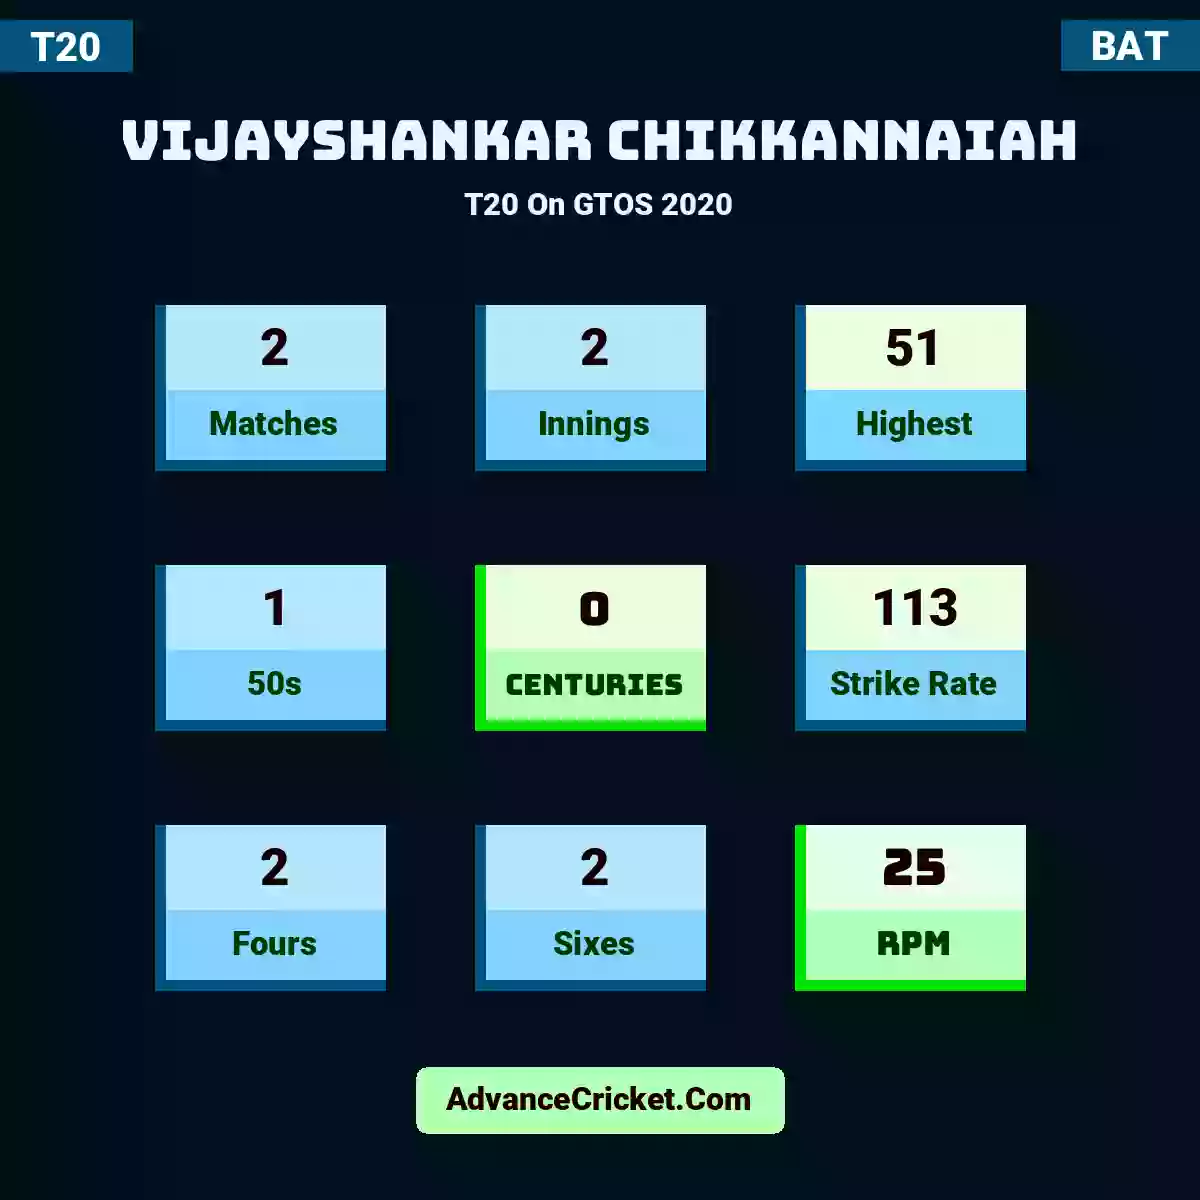 Vijayshankar Chikkannaiah T20  On GTOS 2020, Vijayshankar Chikkannaiah played 2 matches, scored 51 runs as highest, 1 half-centuries, and 0 centuries, with a strike rate of 113. V.Chikkannaiah hit 2 fours and 2 sixes, with an RPM of 25.